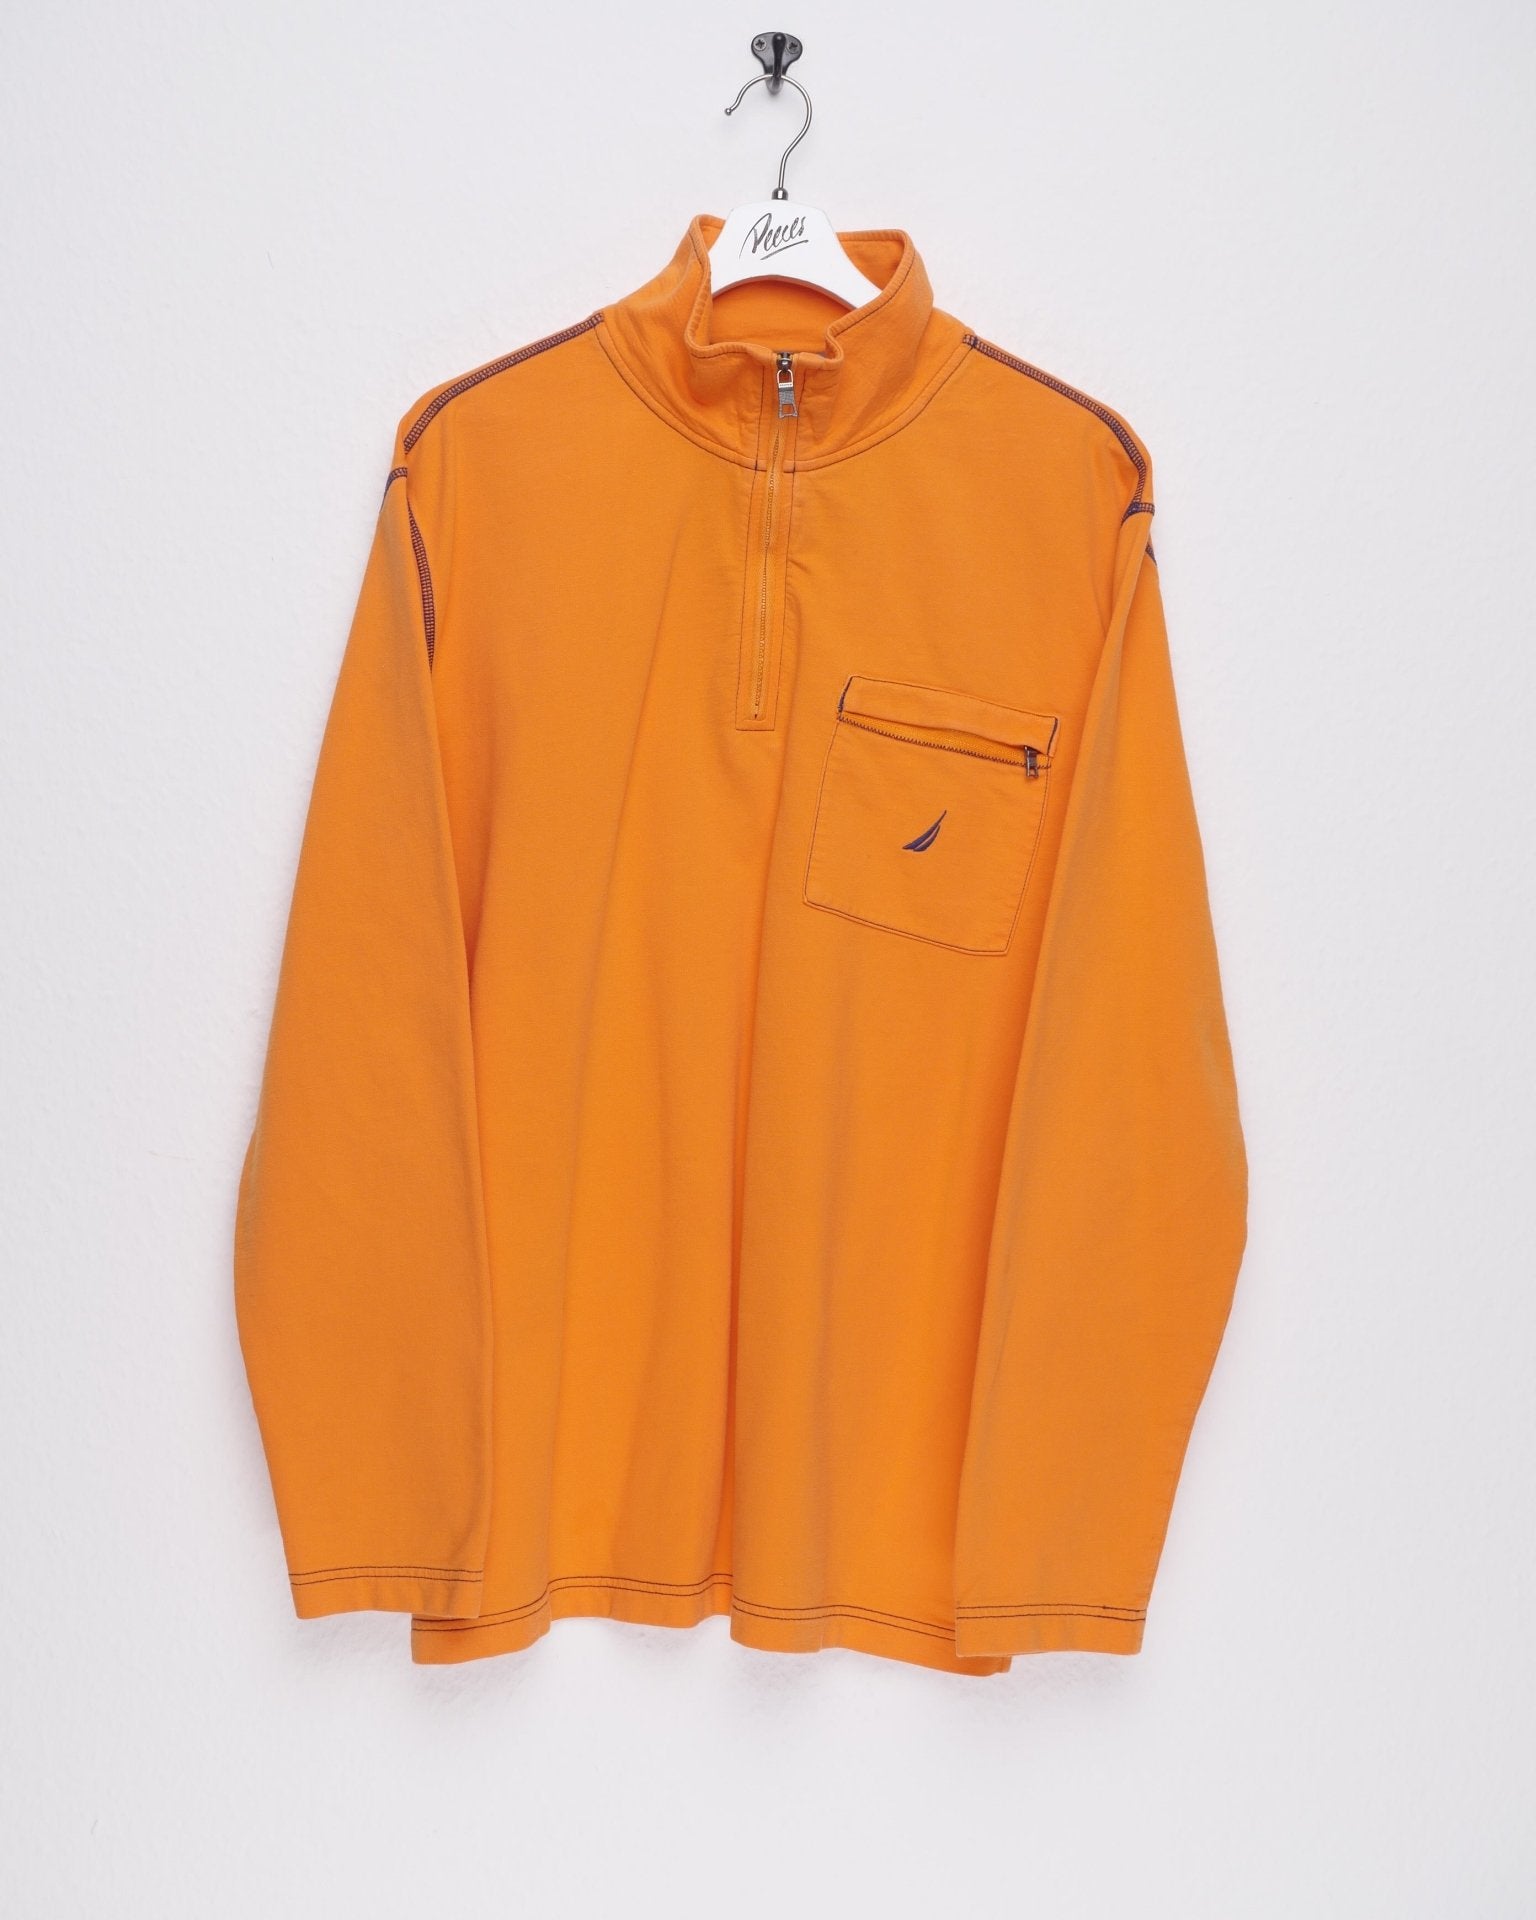 nautica embroidered Logo orange Half Zip Sweater - Peeces